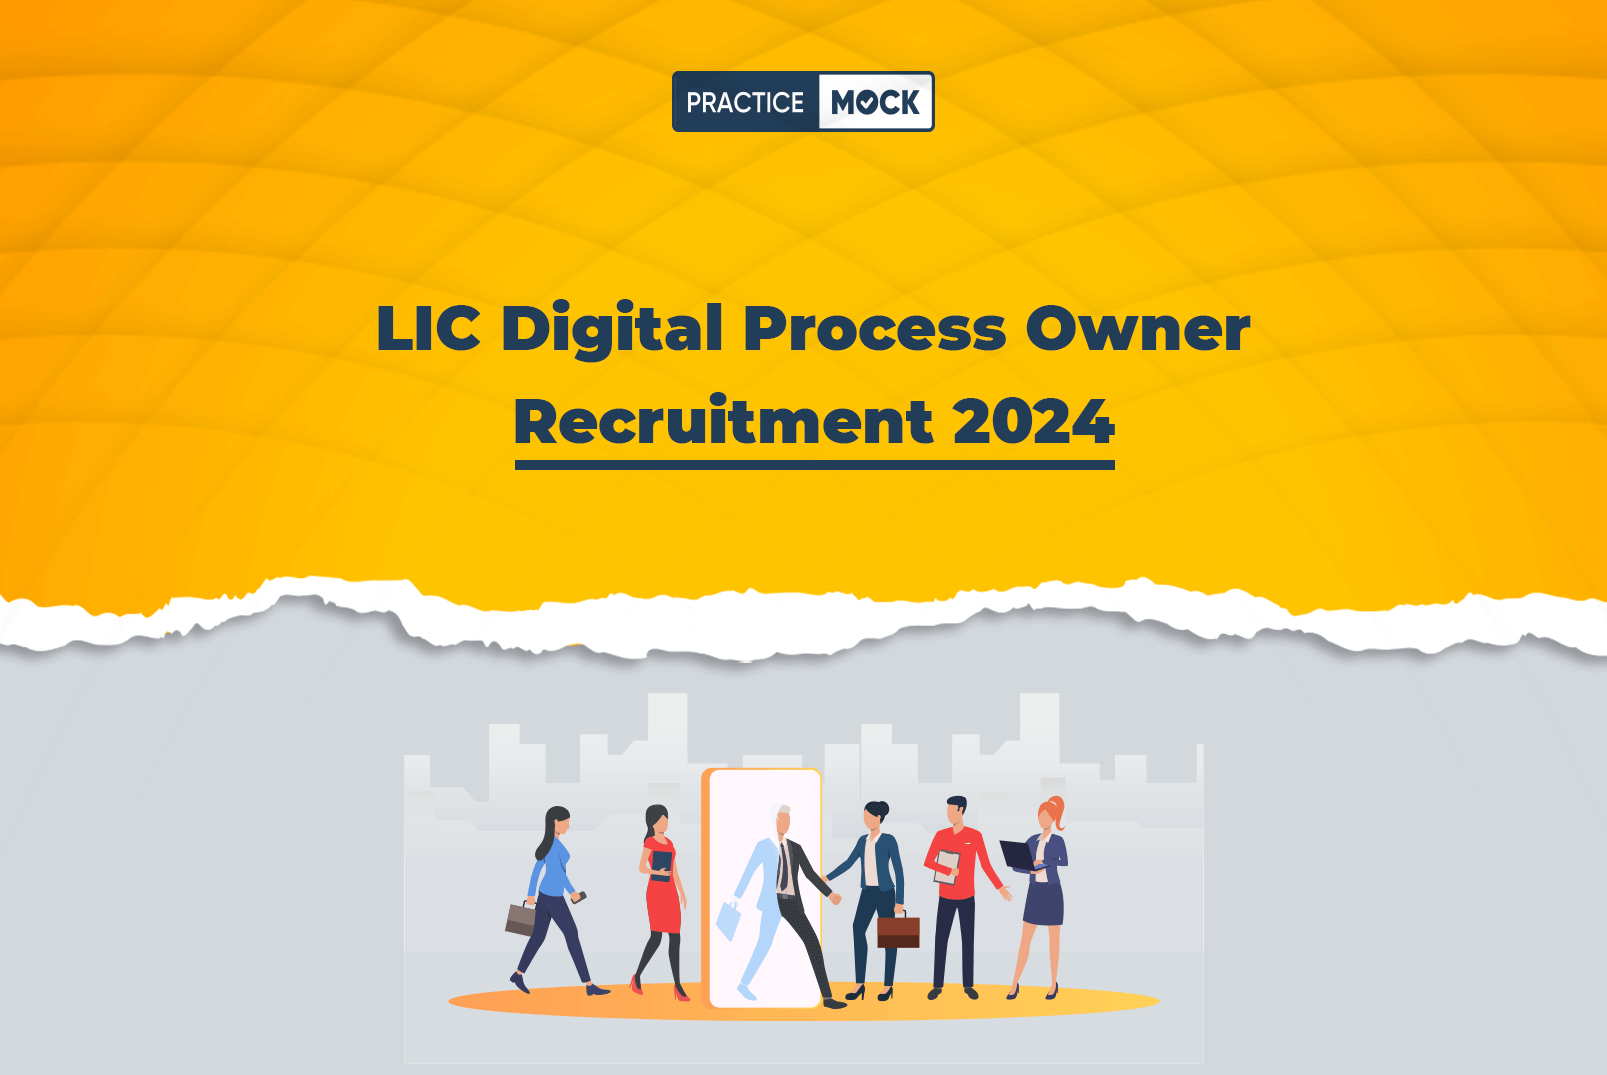 LIC Digital Process Owner Recruitment 2024